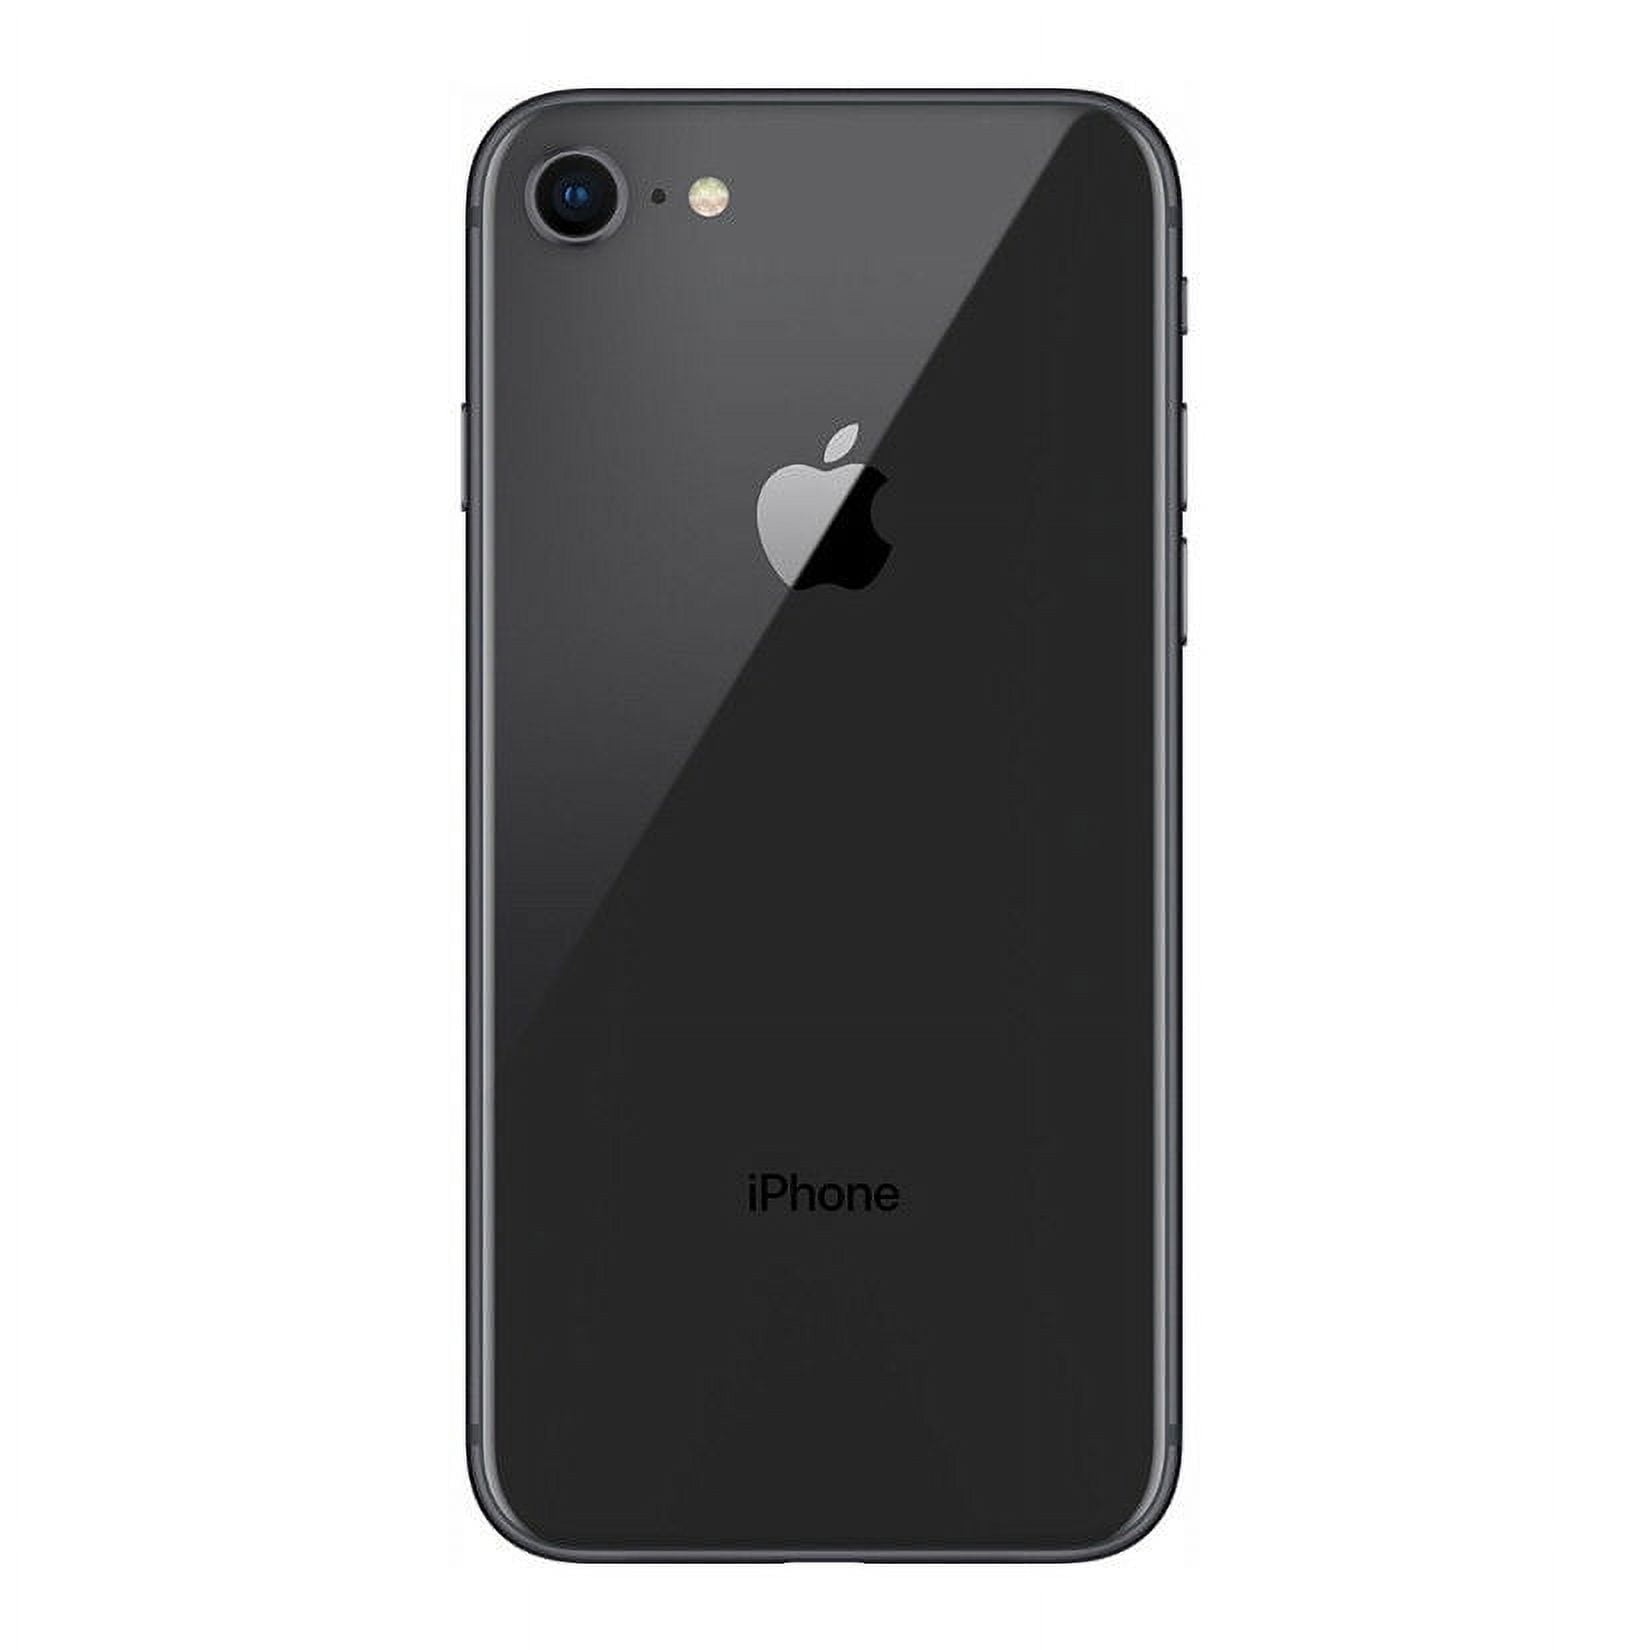 Pre-Owned Apple iPhone 8 256GB Factory Unlocked Smartphone  (Refurbished:Fair)